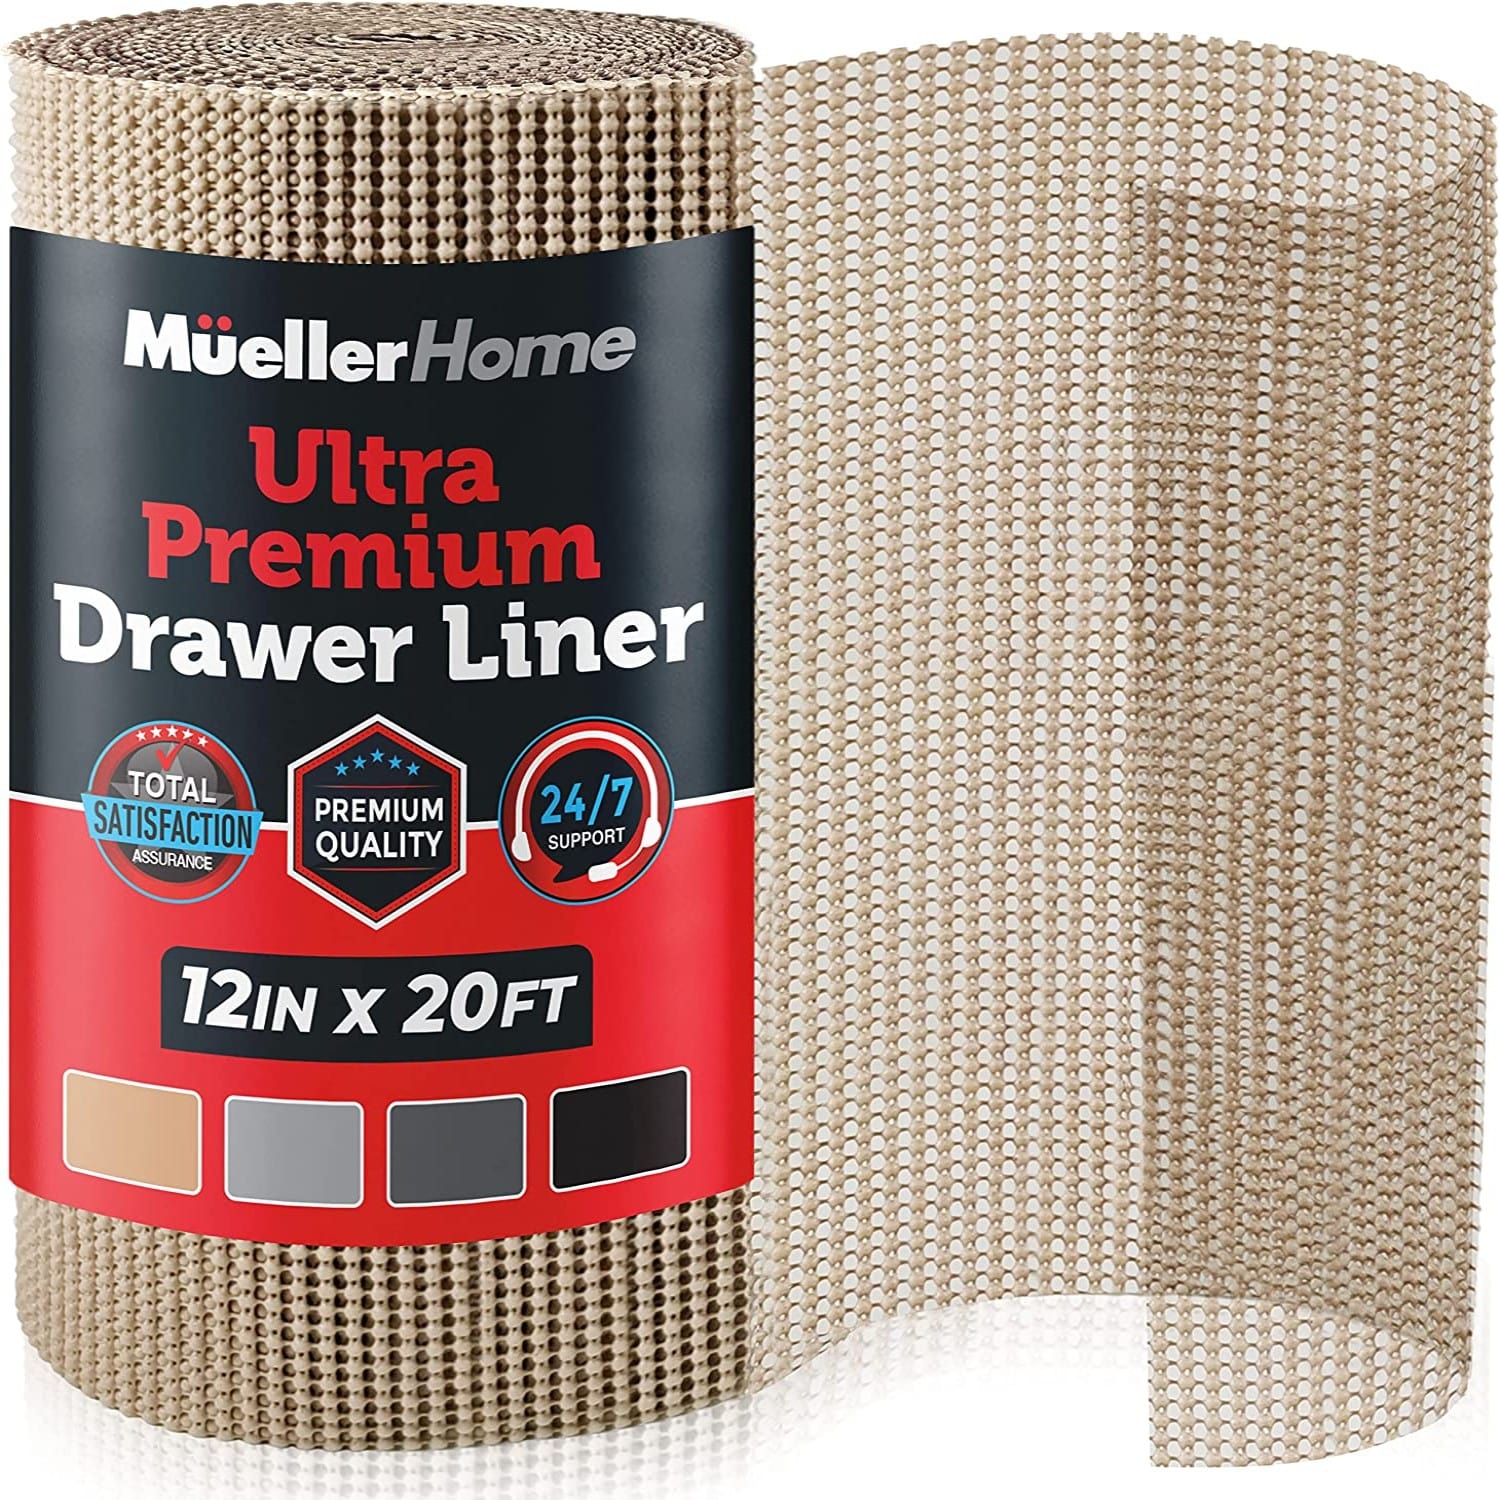 muellerhome_Ultra-Premium Drawer Liner 12in20ft – Beige